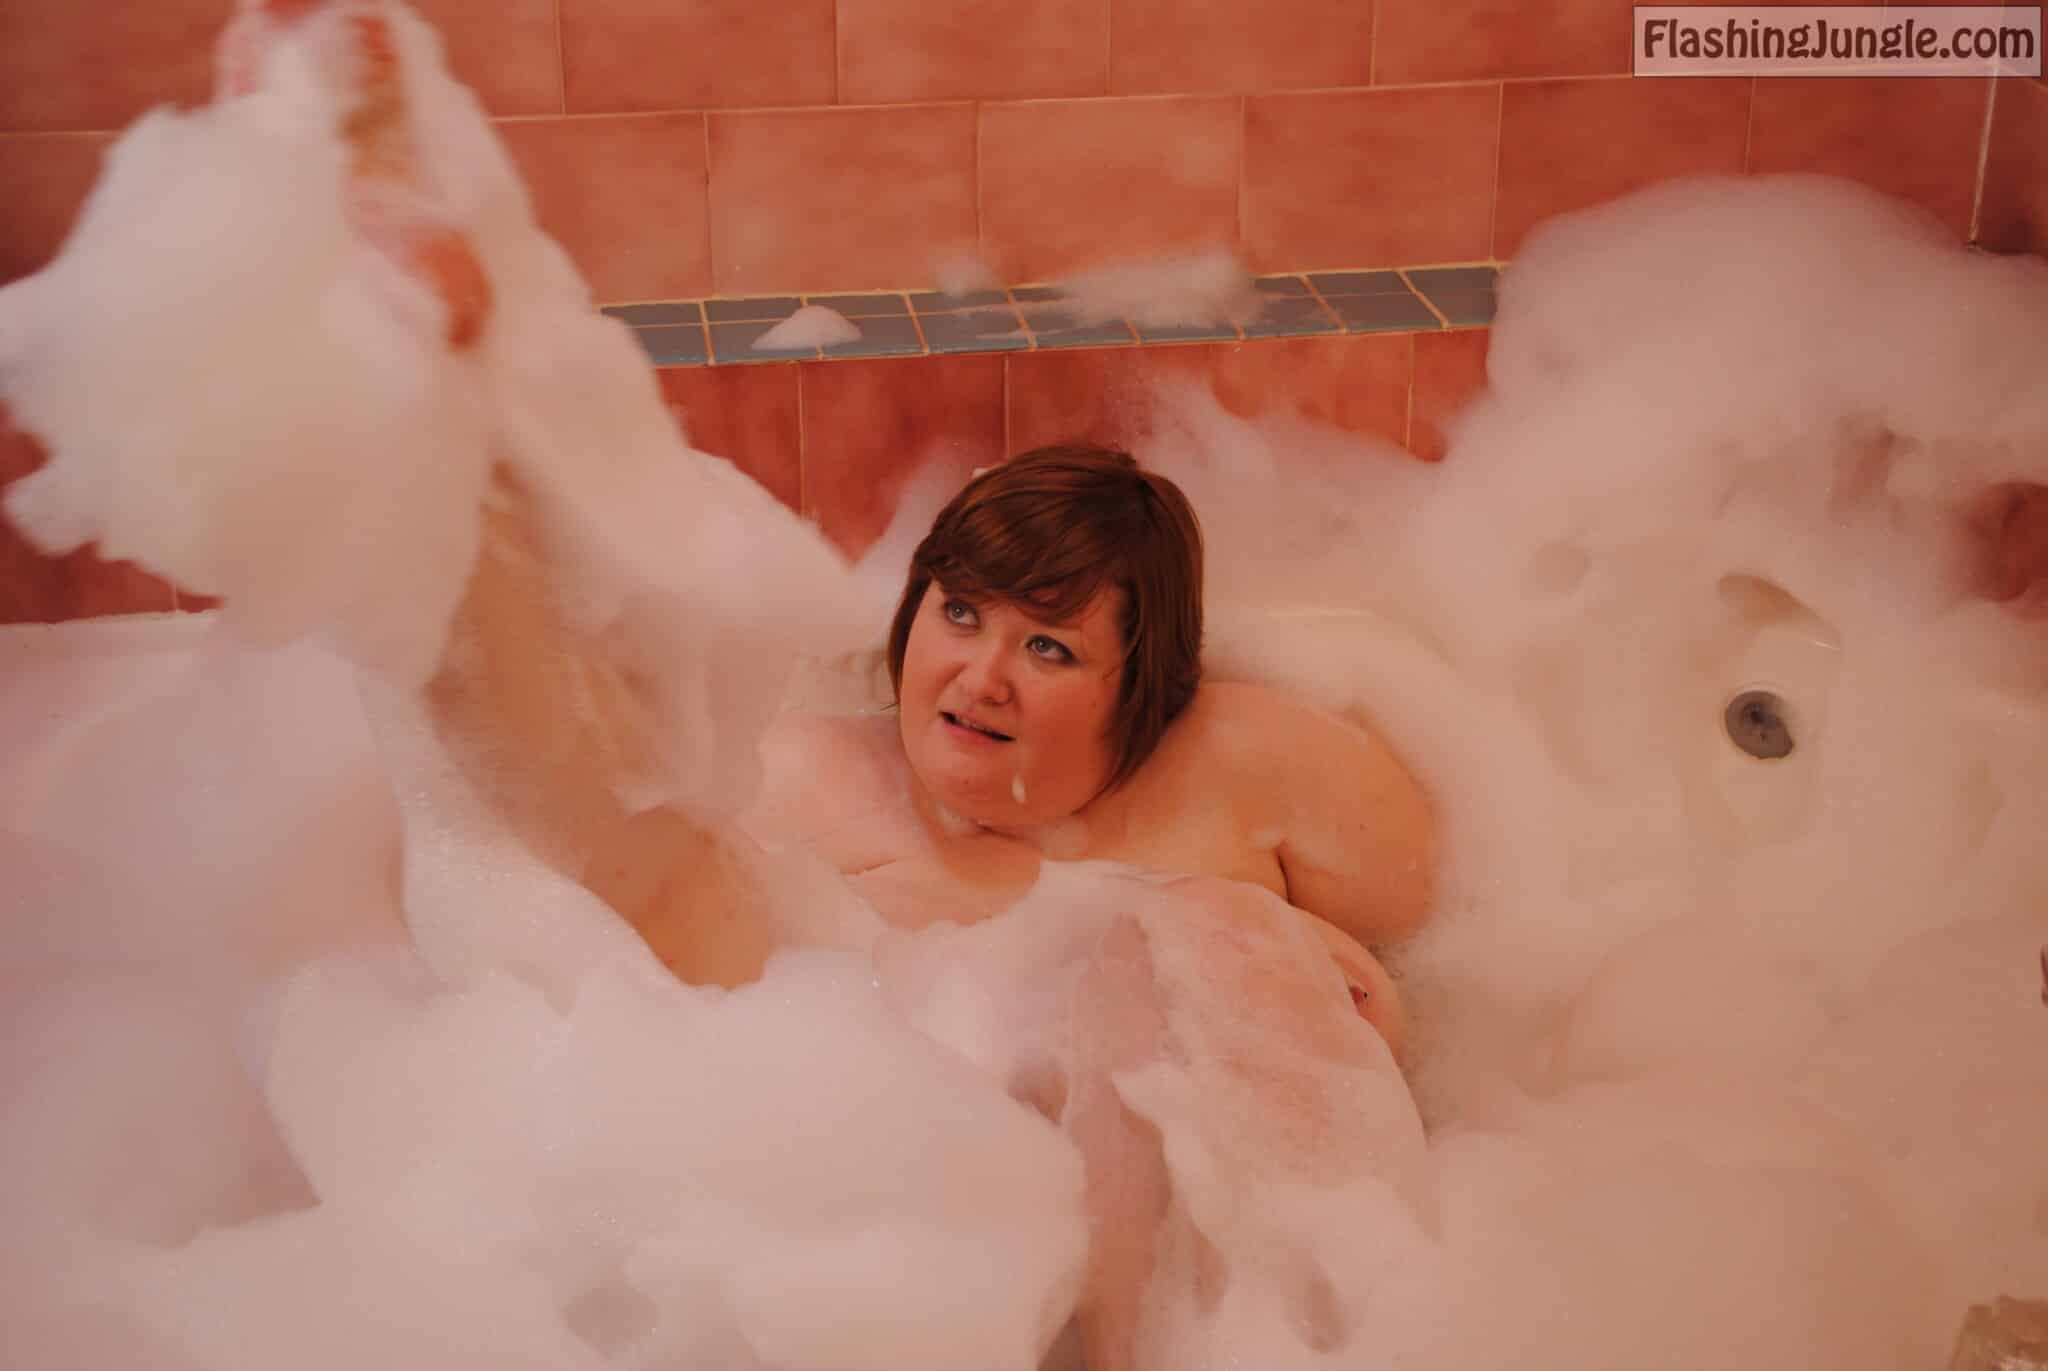 Real Amateurs MILF Flashing Pics Hotwife Pics - Playful BBW In Bubble Bath